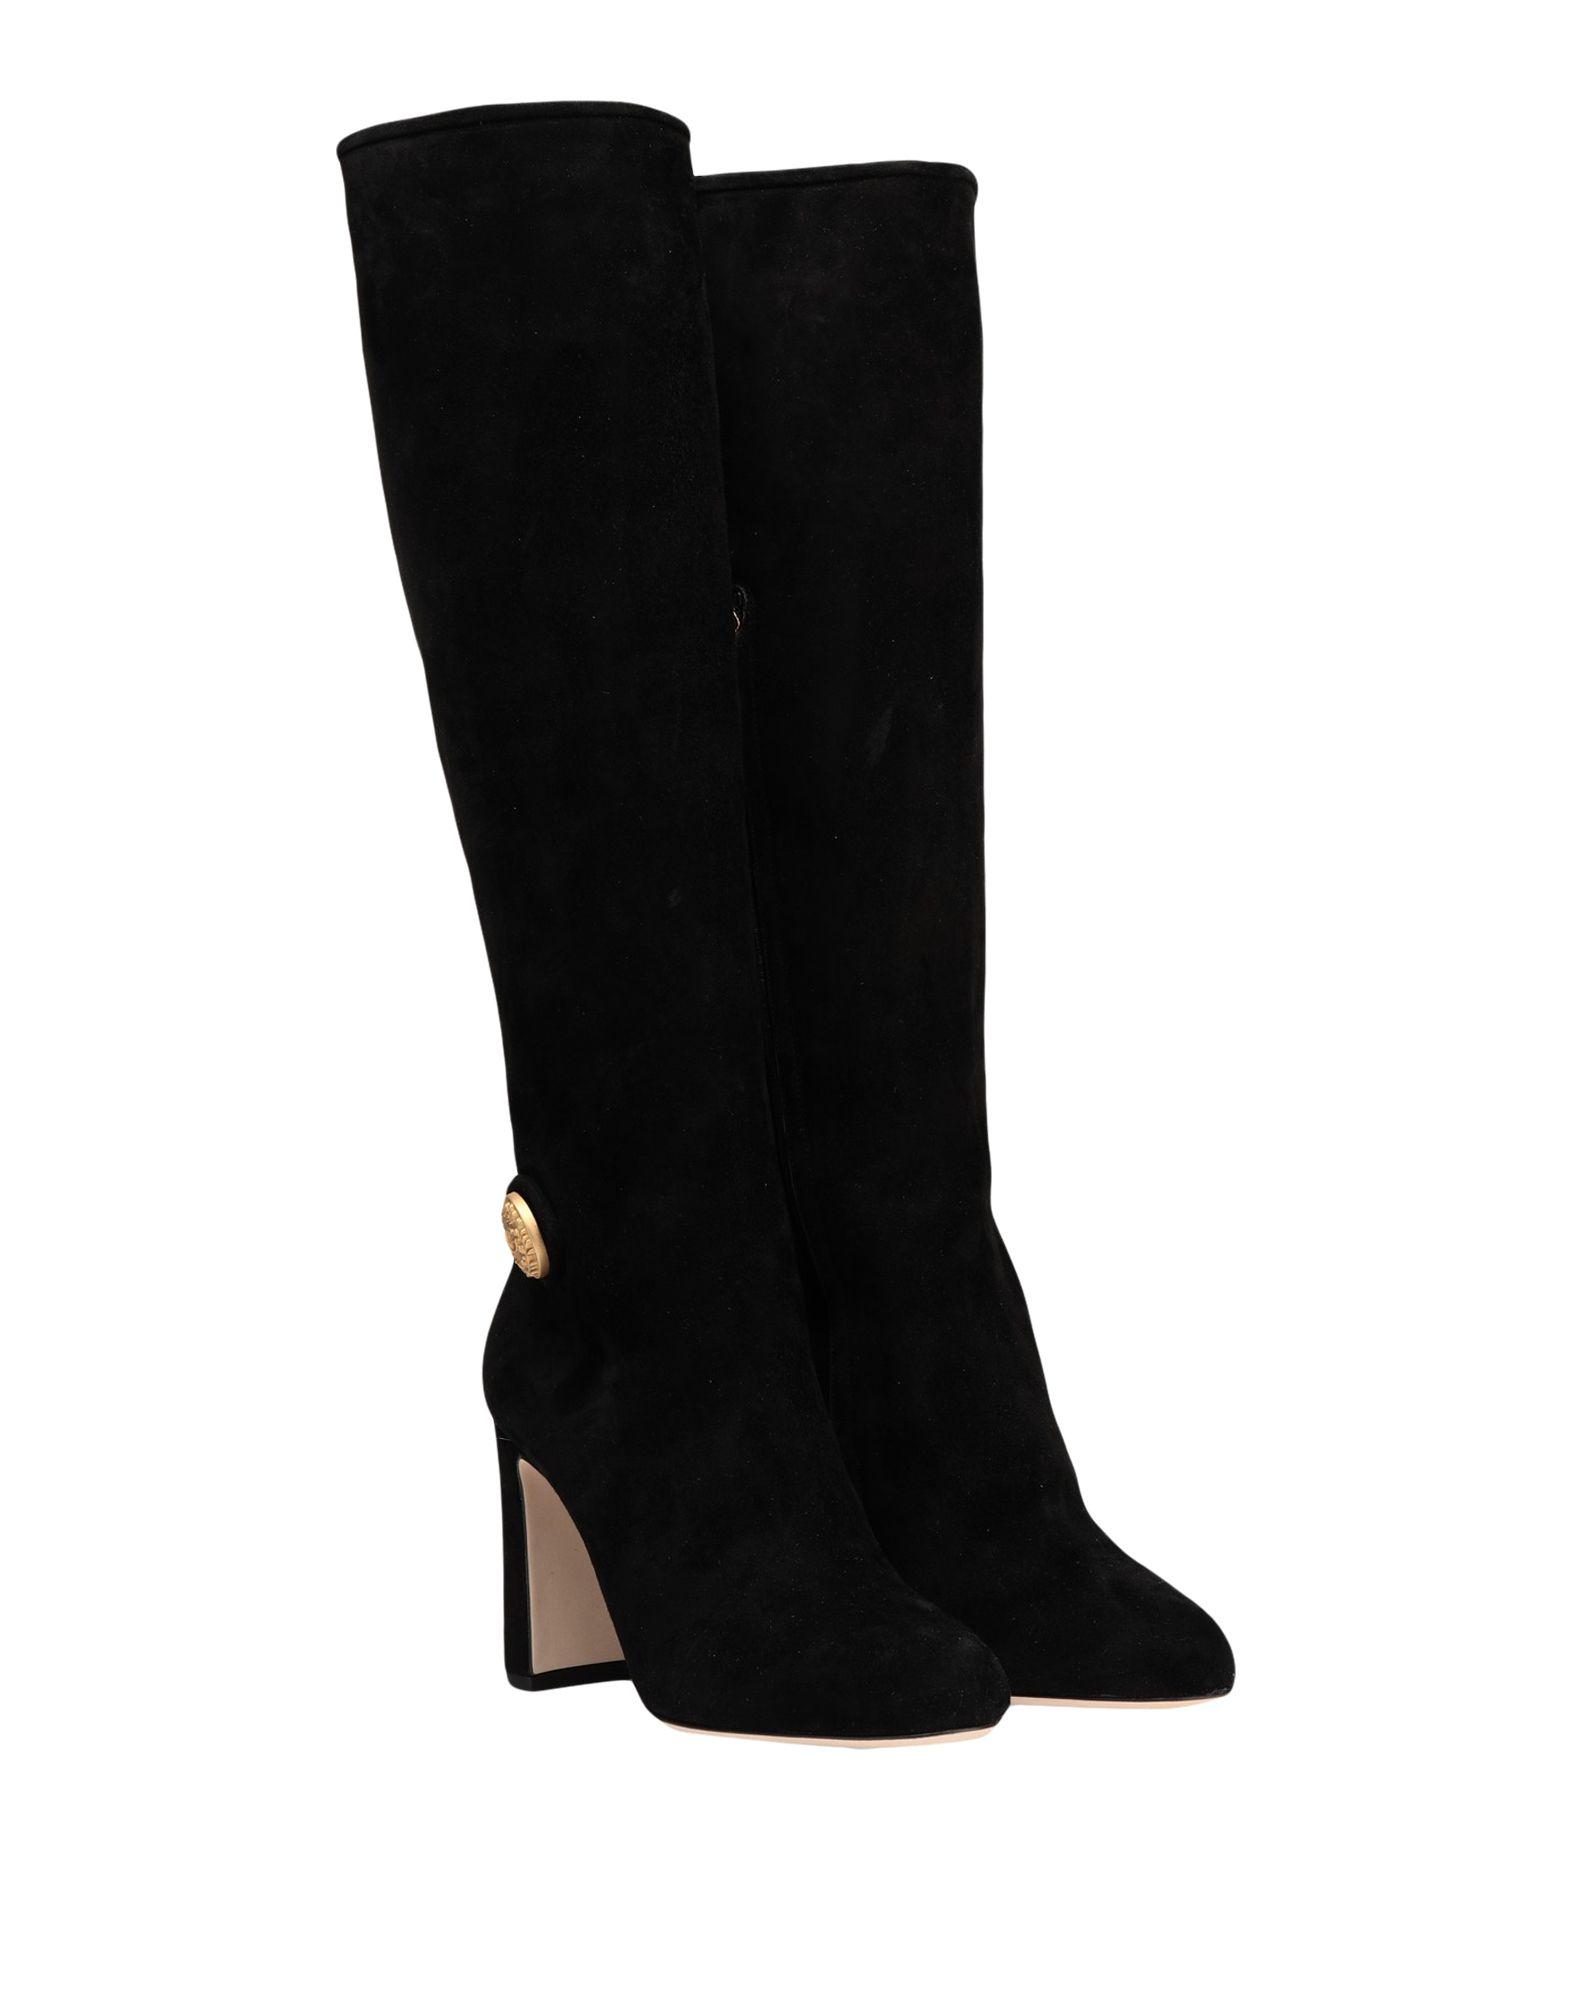 Dolce & Gabbana Boots in Black - Lyst